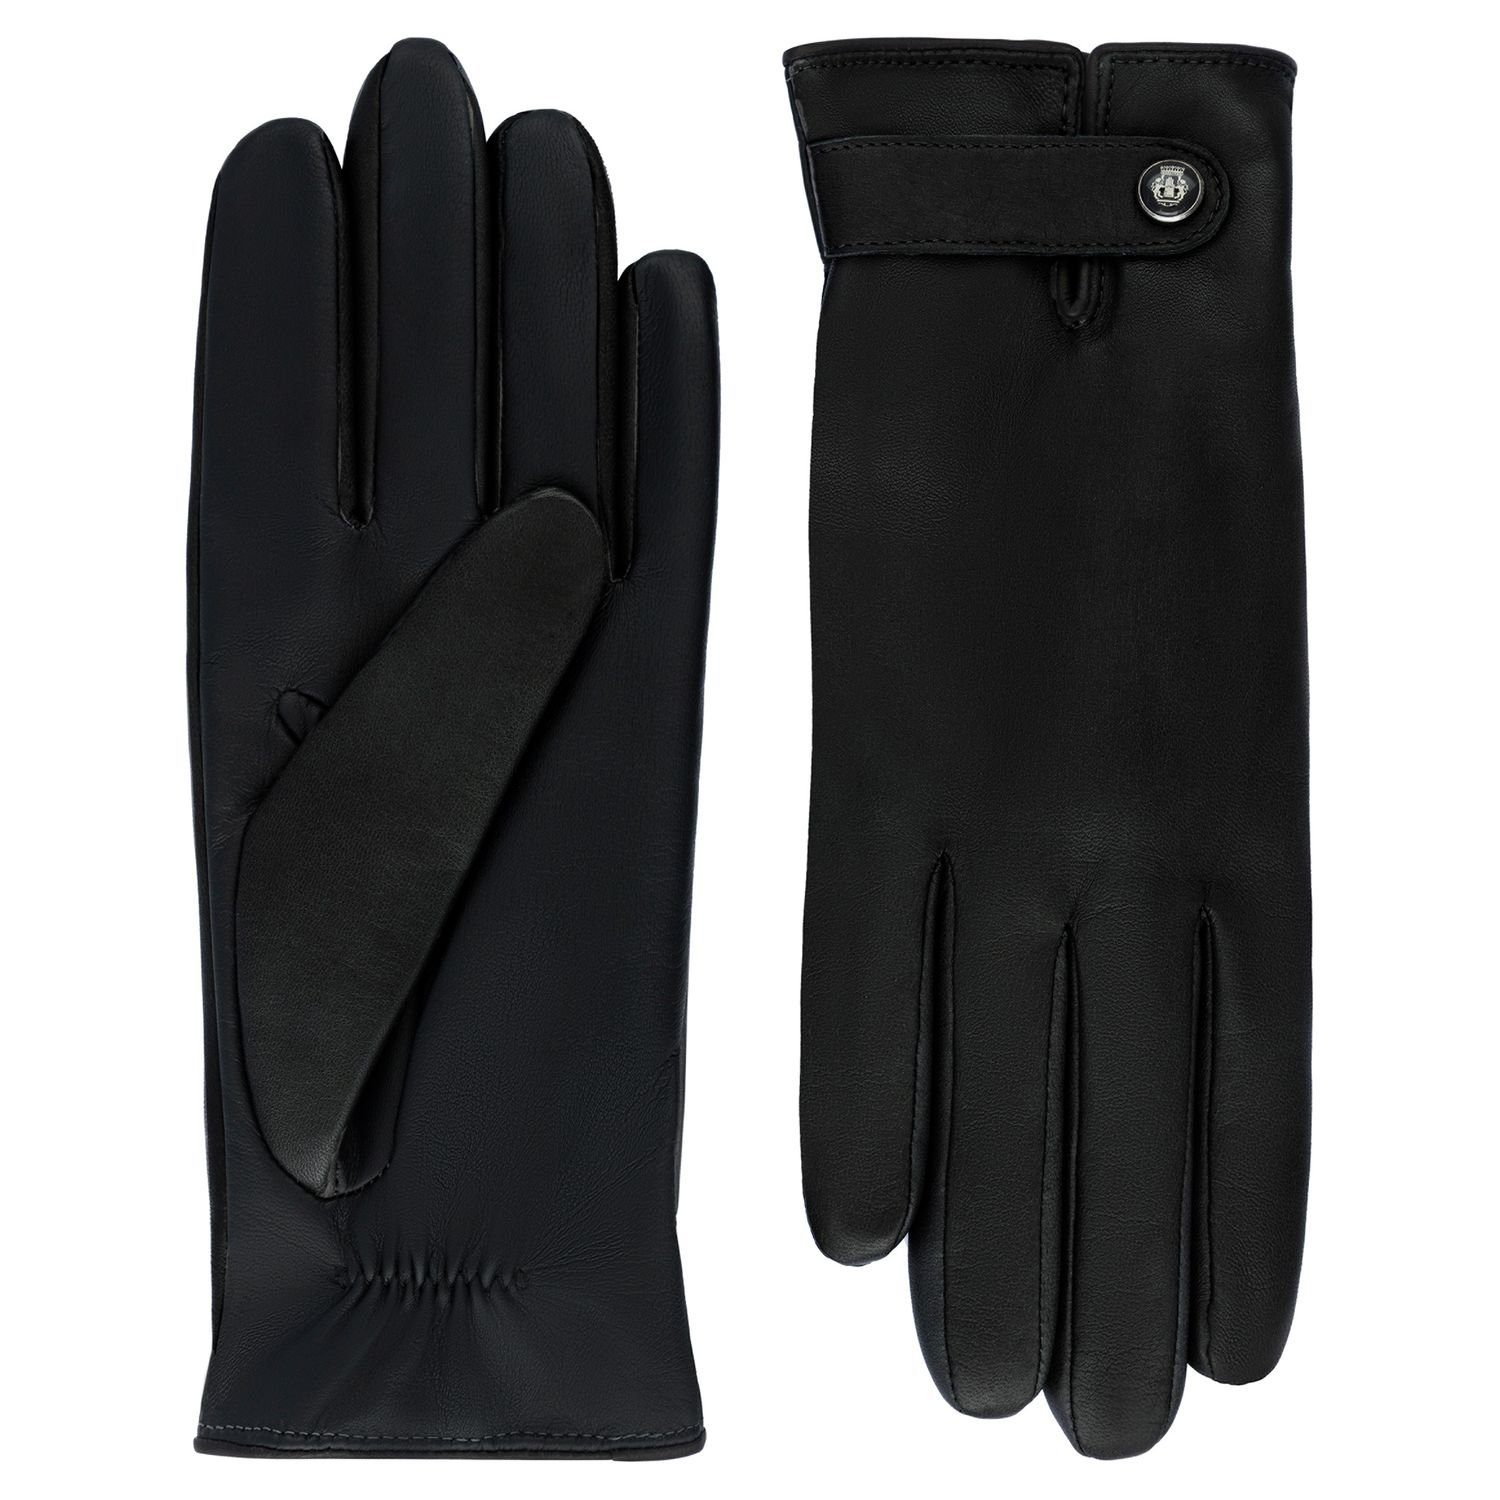 Roeckl Lederhandschuhe Damen Leder Handschuhe mit Handy Touch Funktion | Handschuhe